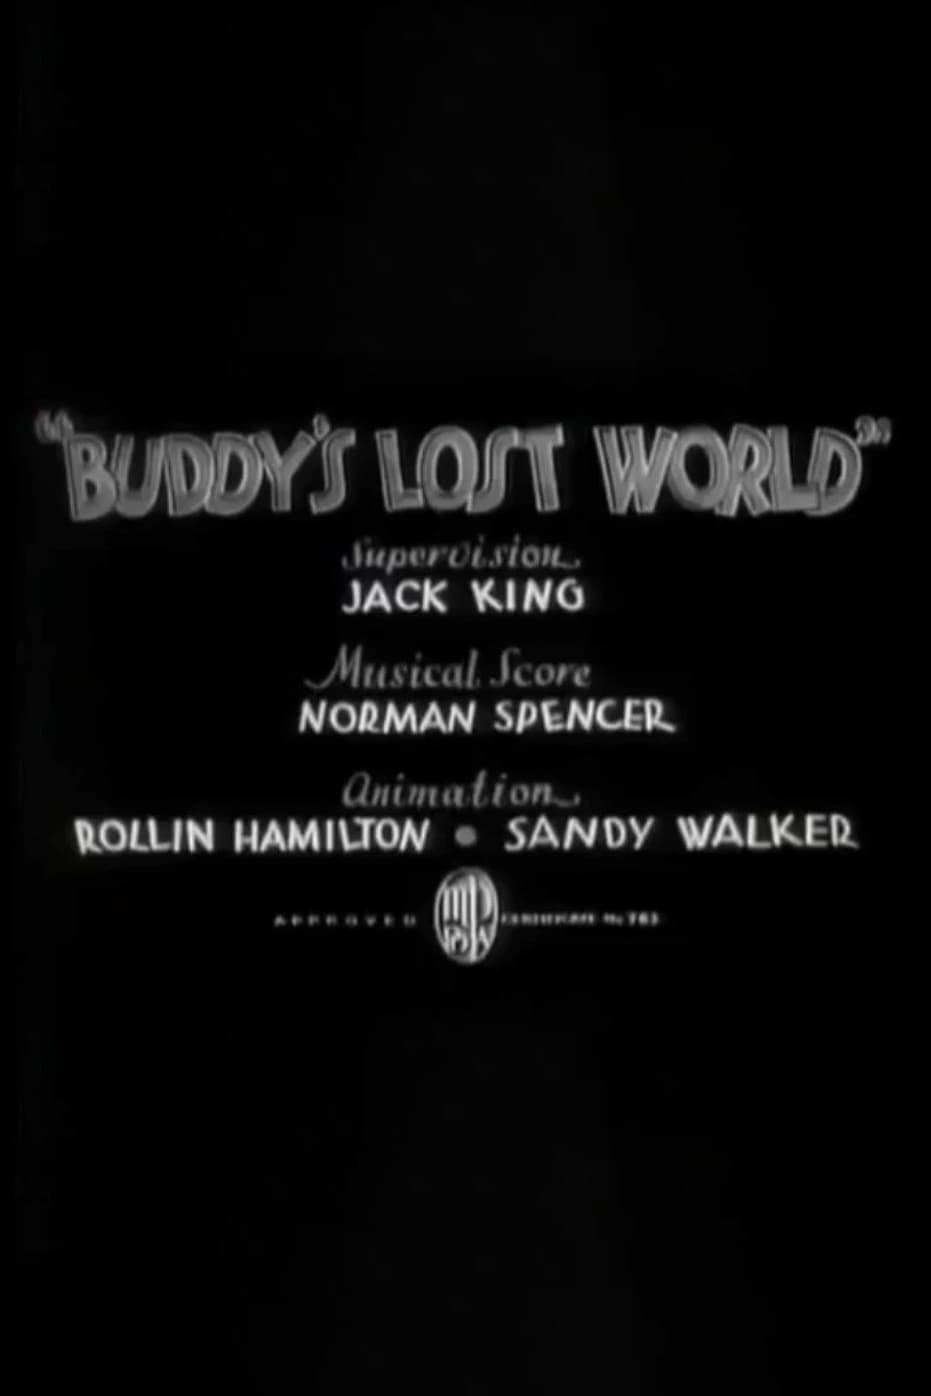 Buddy's Lost World